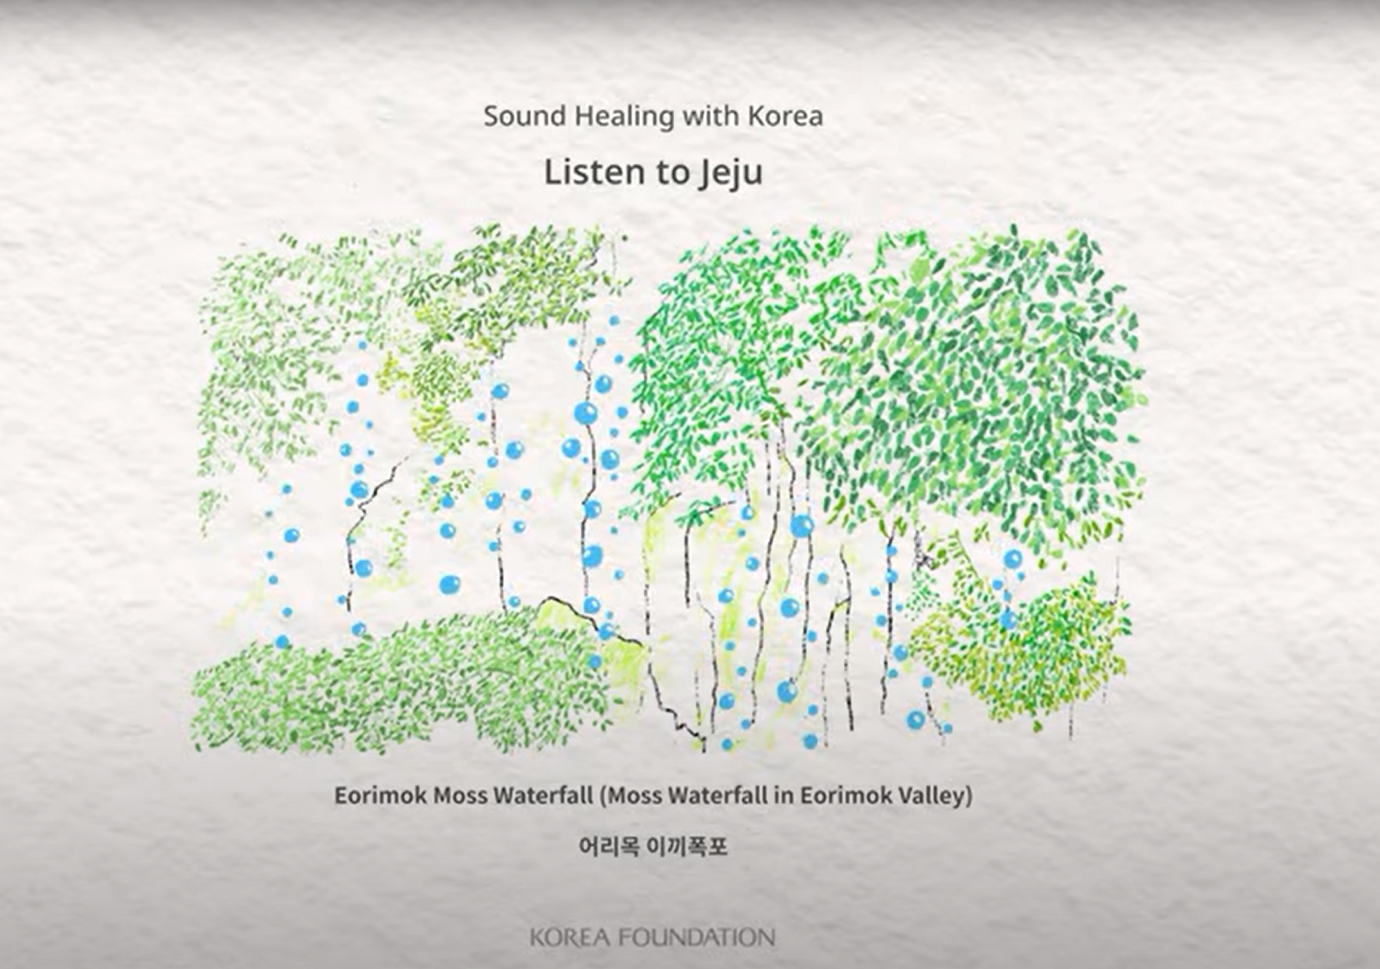 [ASMR] 2021 Sound Healing with Korea - Listen to Jeju | 2. Eorimok Moss Waterfall